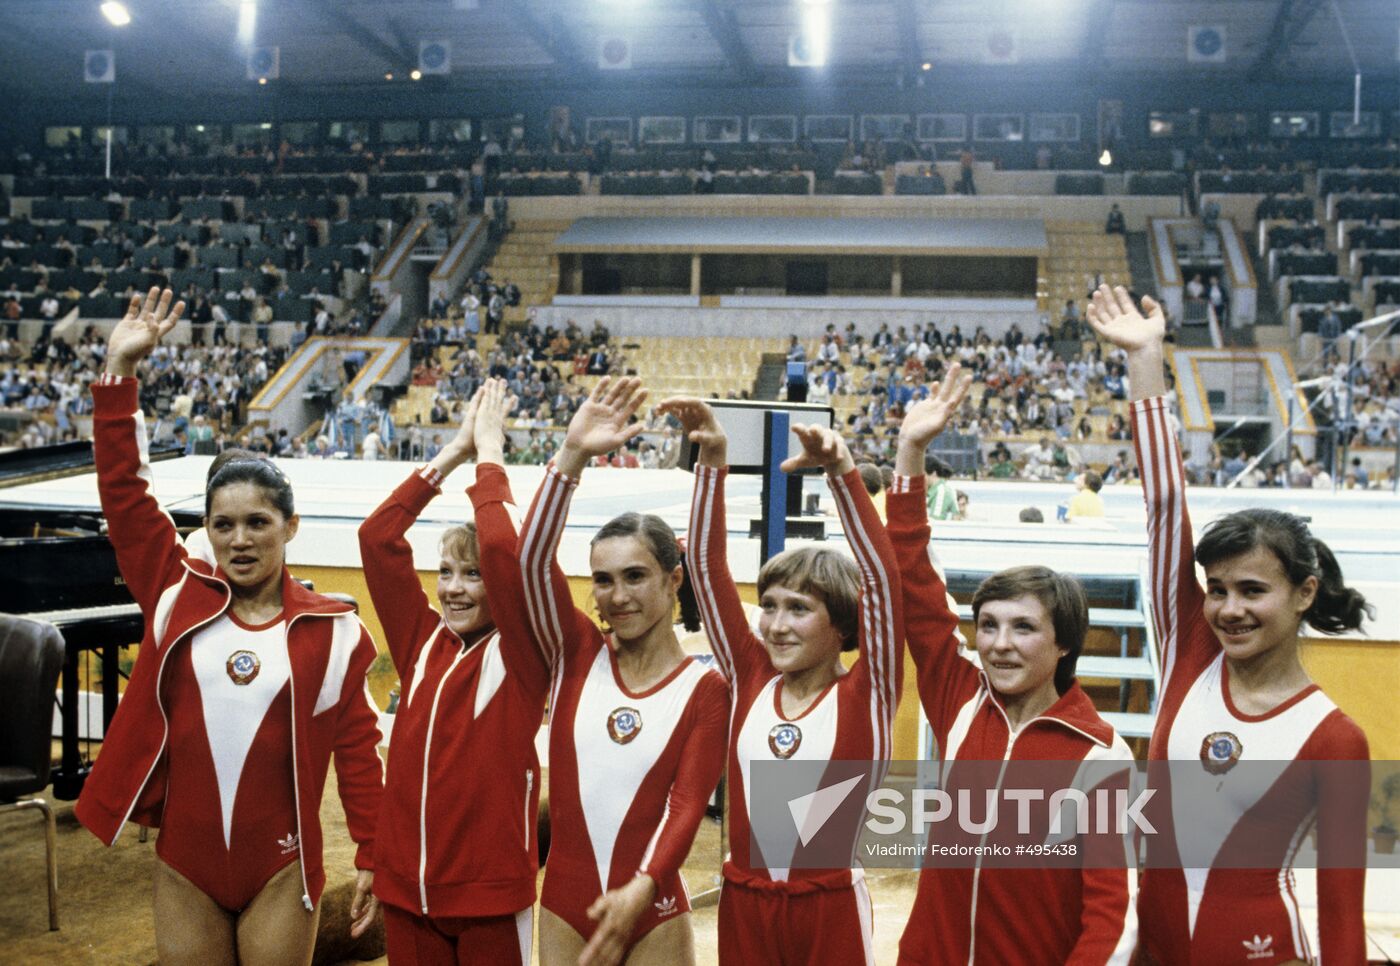 USSR national artistic gymnastics team